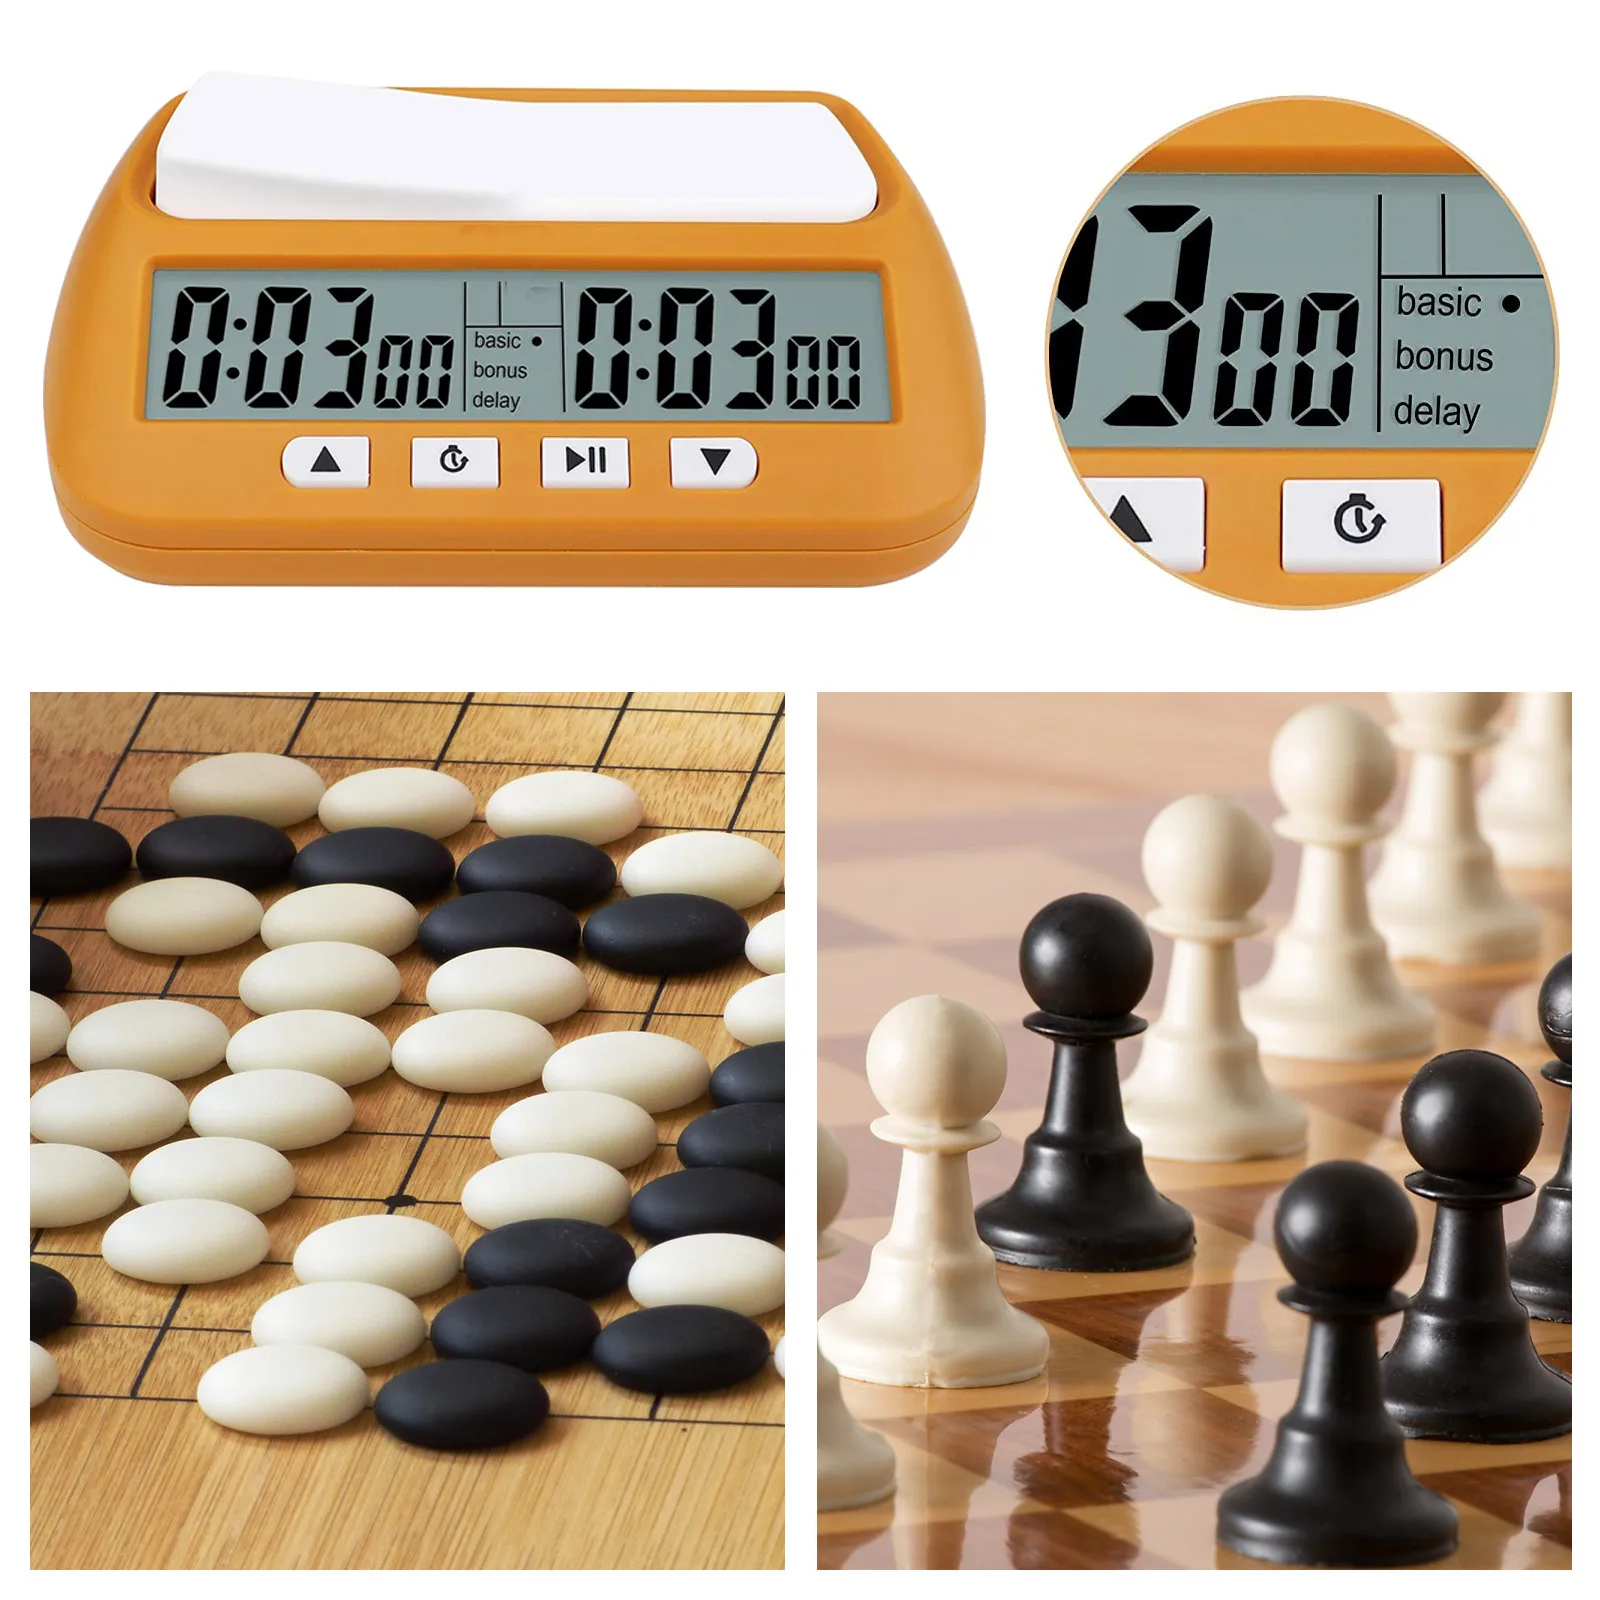 Professionelle Compact Schach Uhr Count Up Down Timer für Board Game 